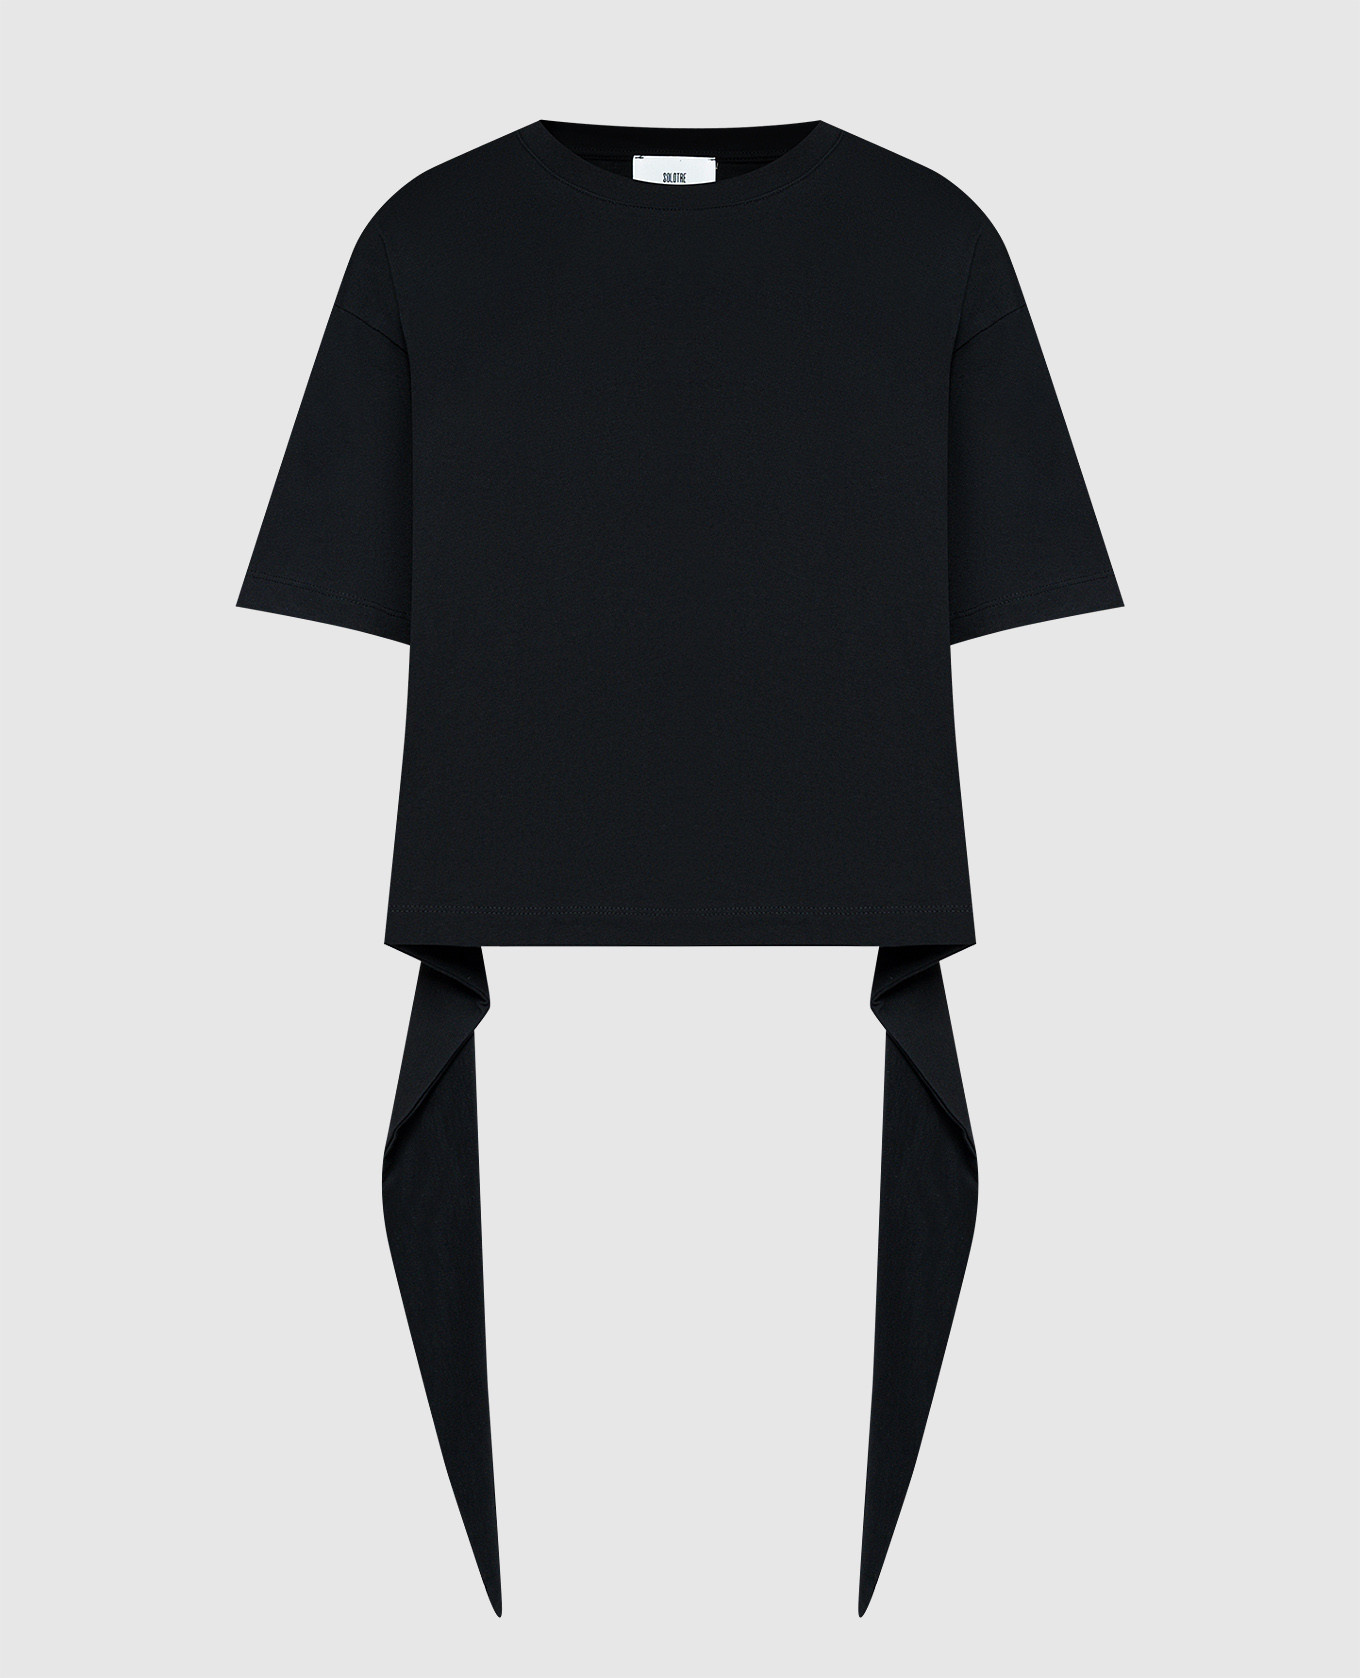 Black t-shirt with an asymmetrical bottom